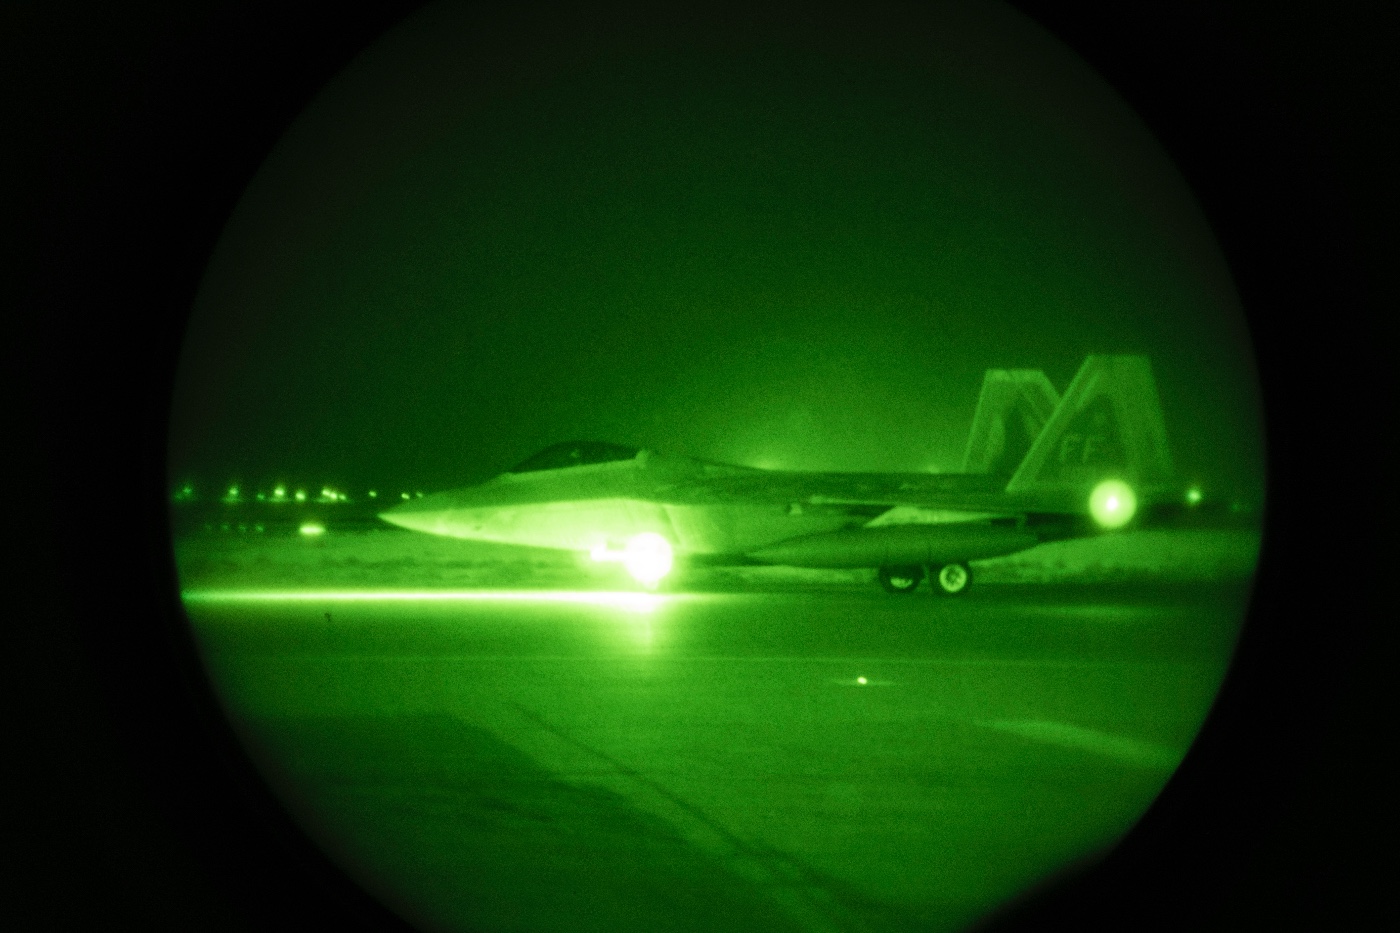 f-22 as seen through night vision